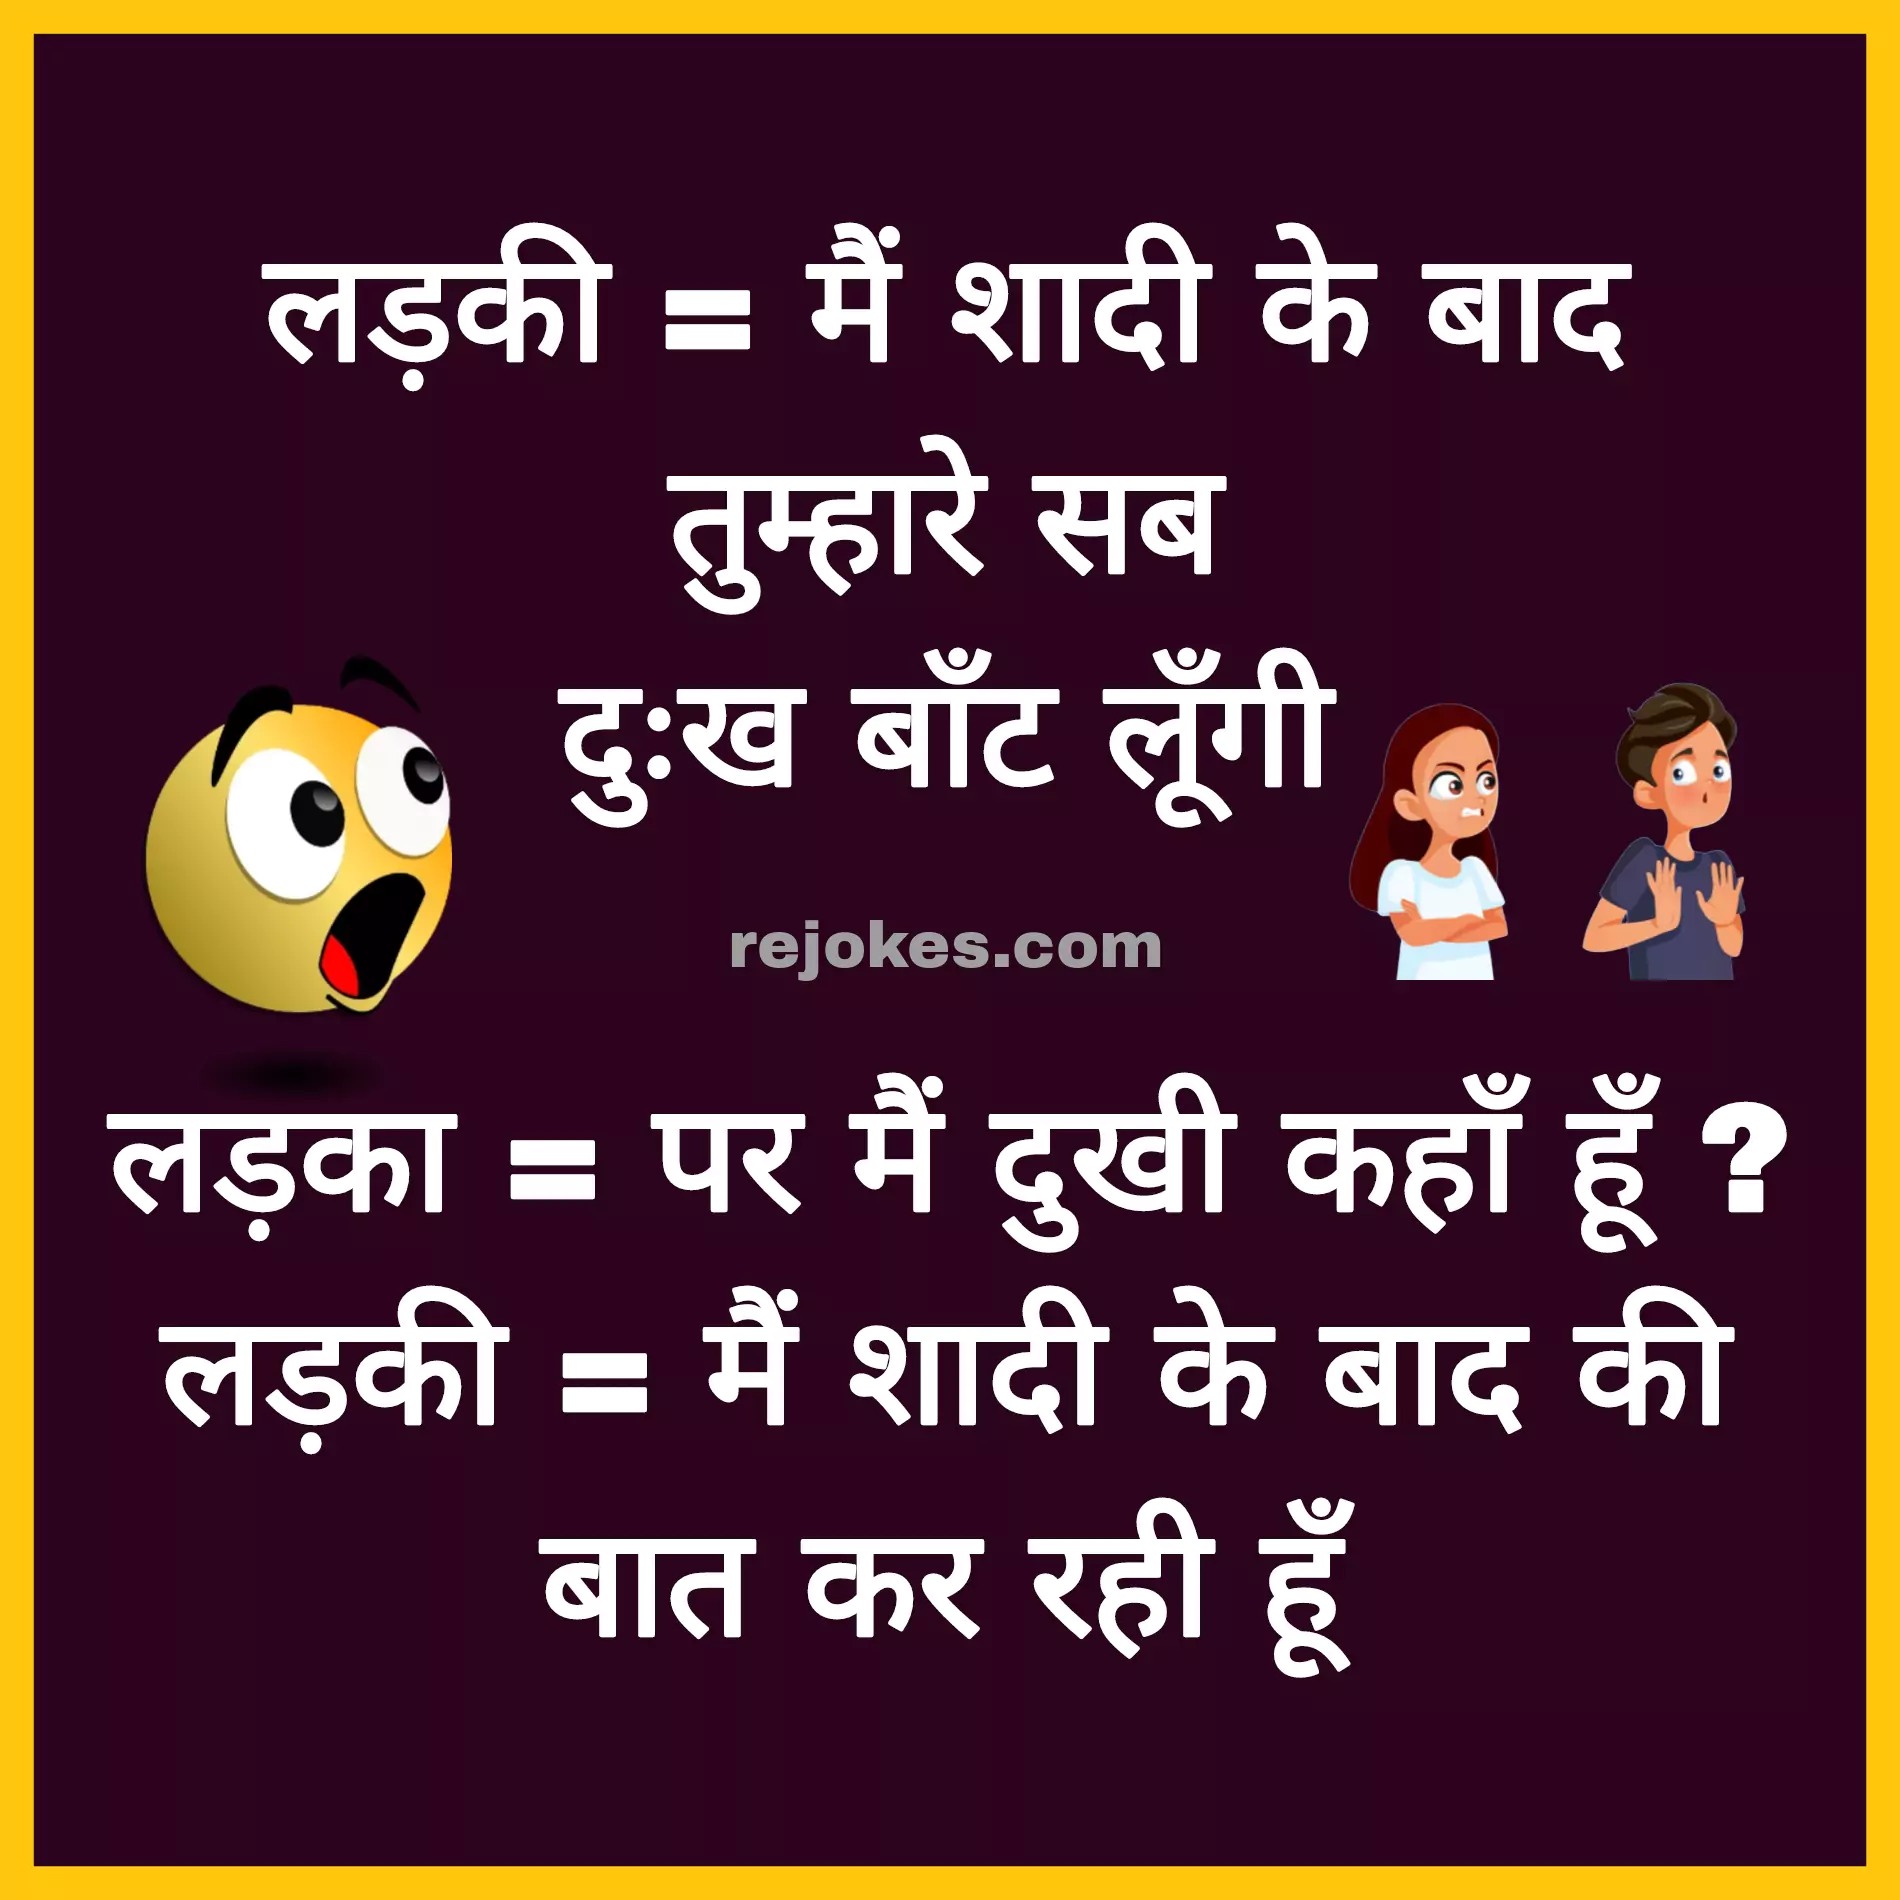 girlfriend jokes in hindi images download